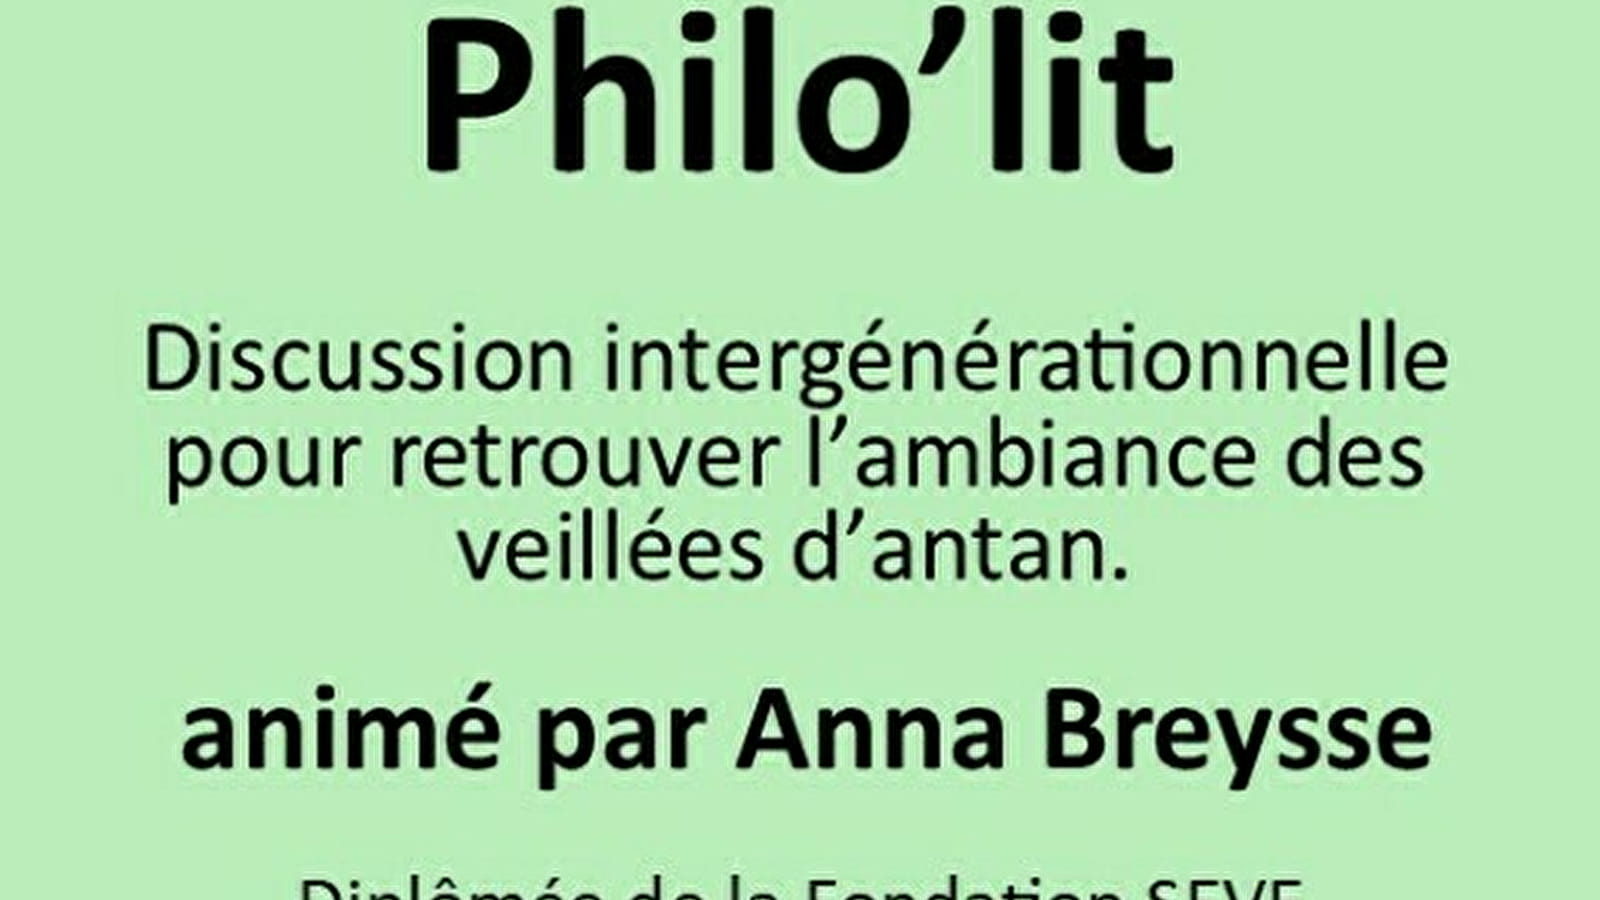 Philo'lit